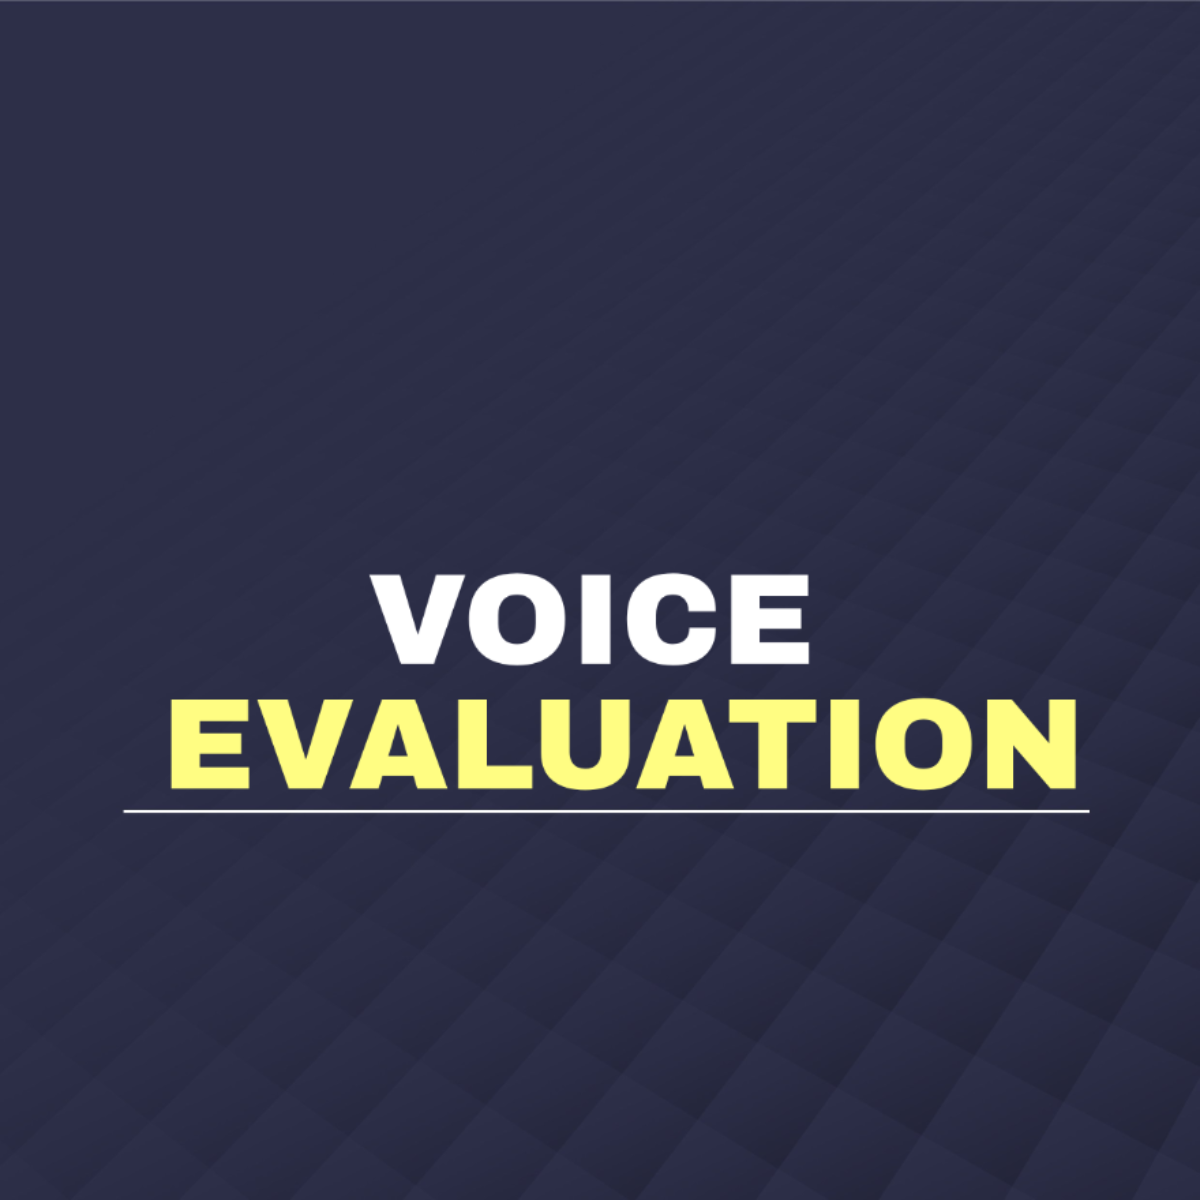 Voice Evaluation Template